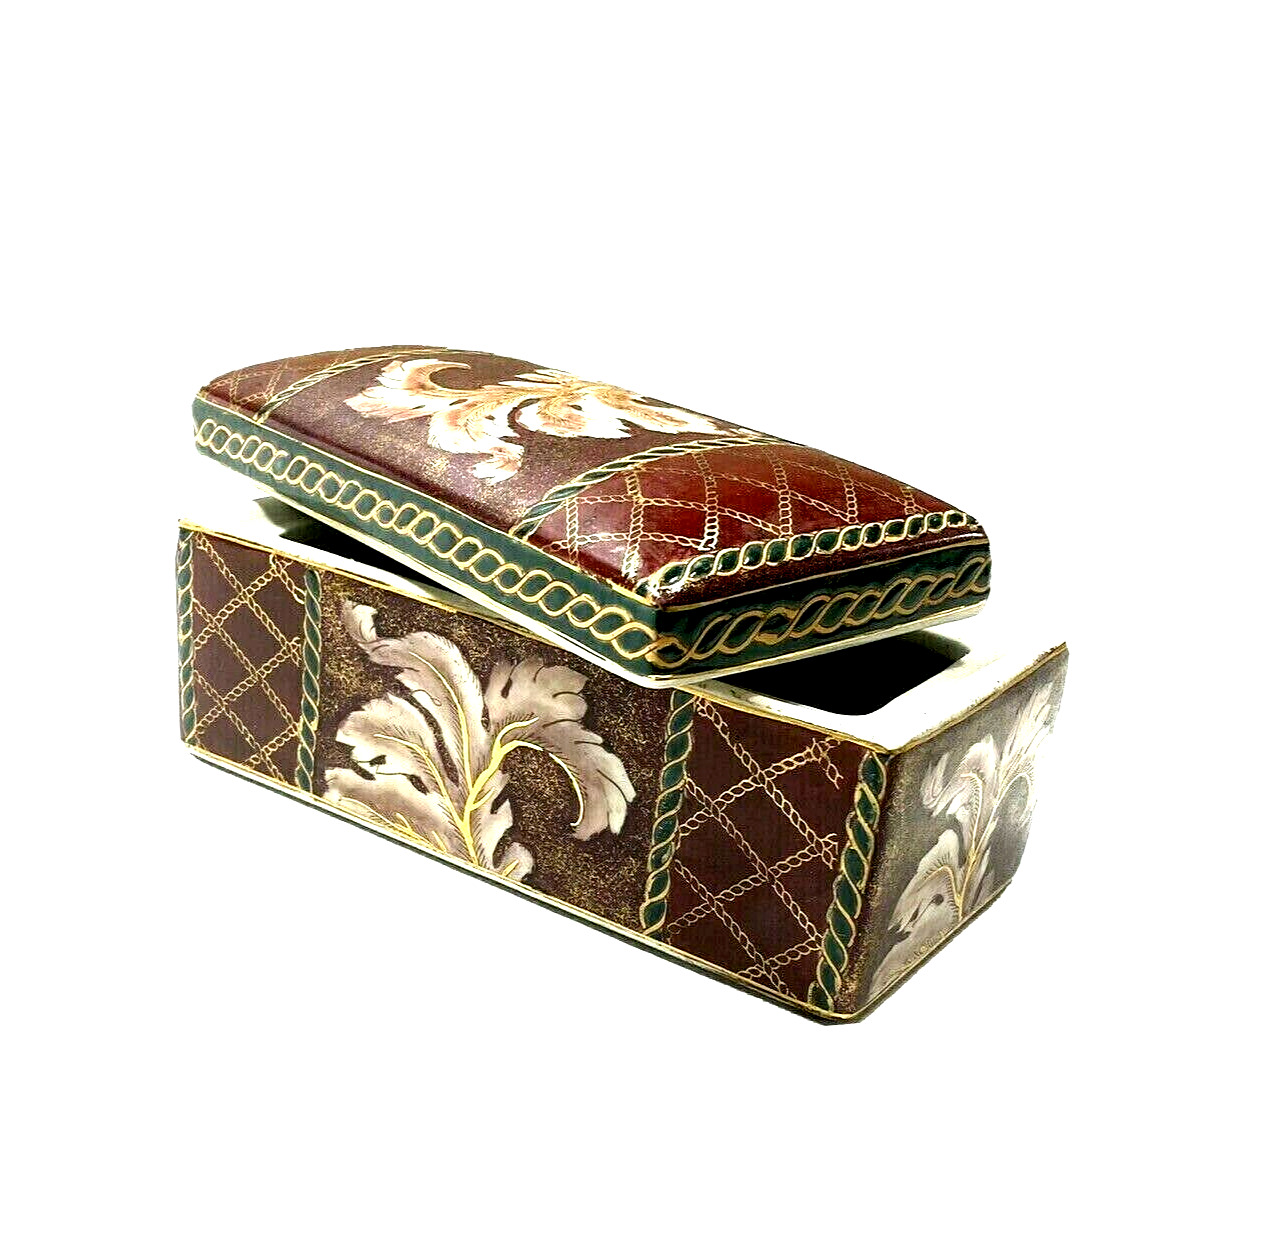 Vintage 1960s Asian Trinket Box Ceramic Glass Burundy Green Gold Vanity Decor